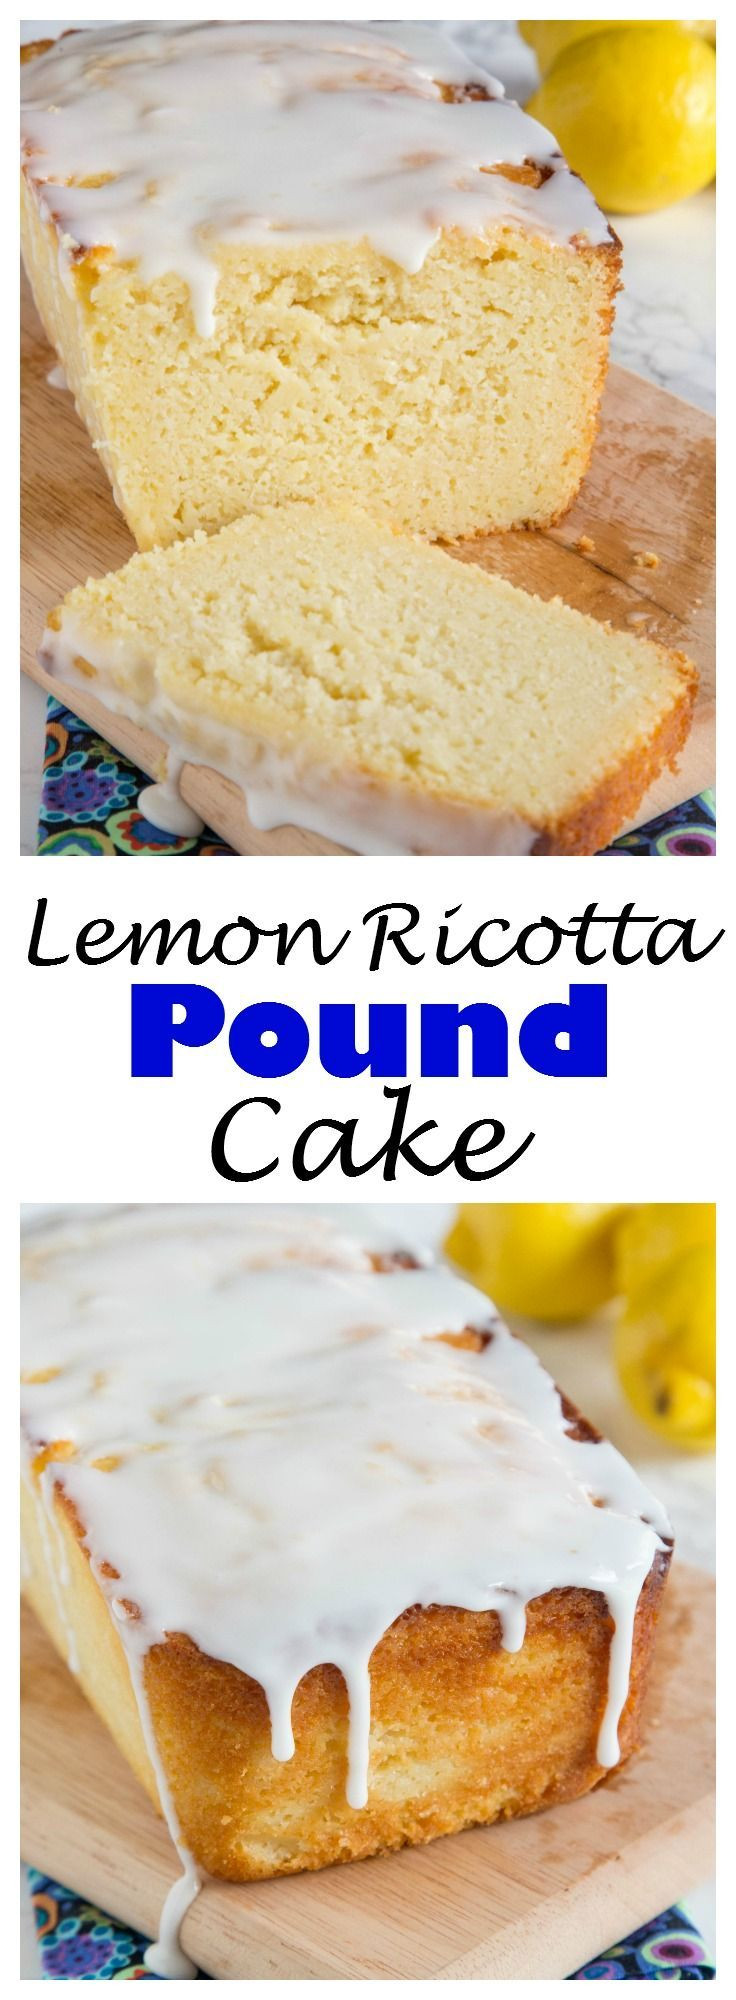 Moist Lemon Pound Cake
 LEMON RICOTTA POUND CAKE – A DENSE AND SUPER MOIST LEMON